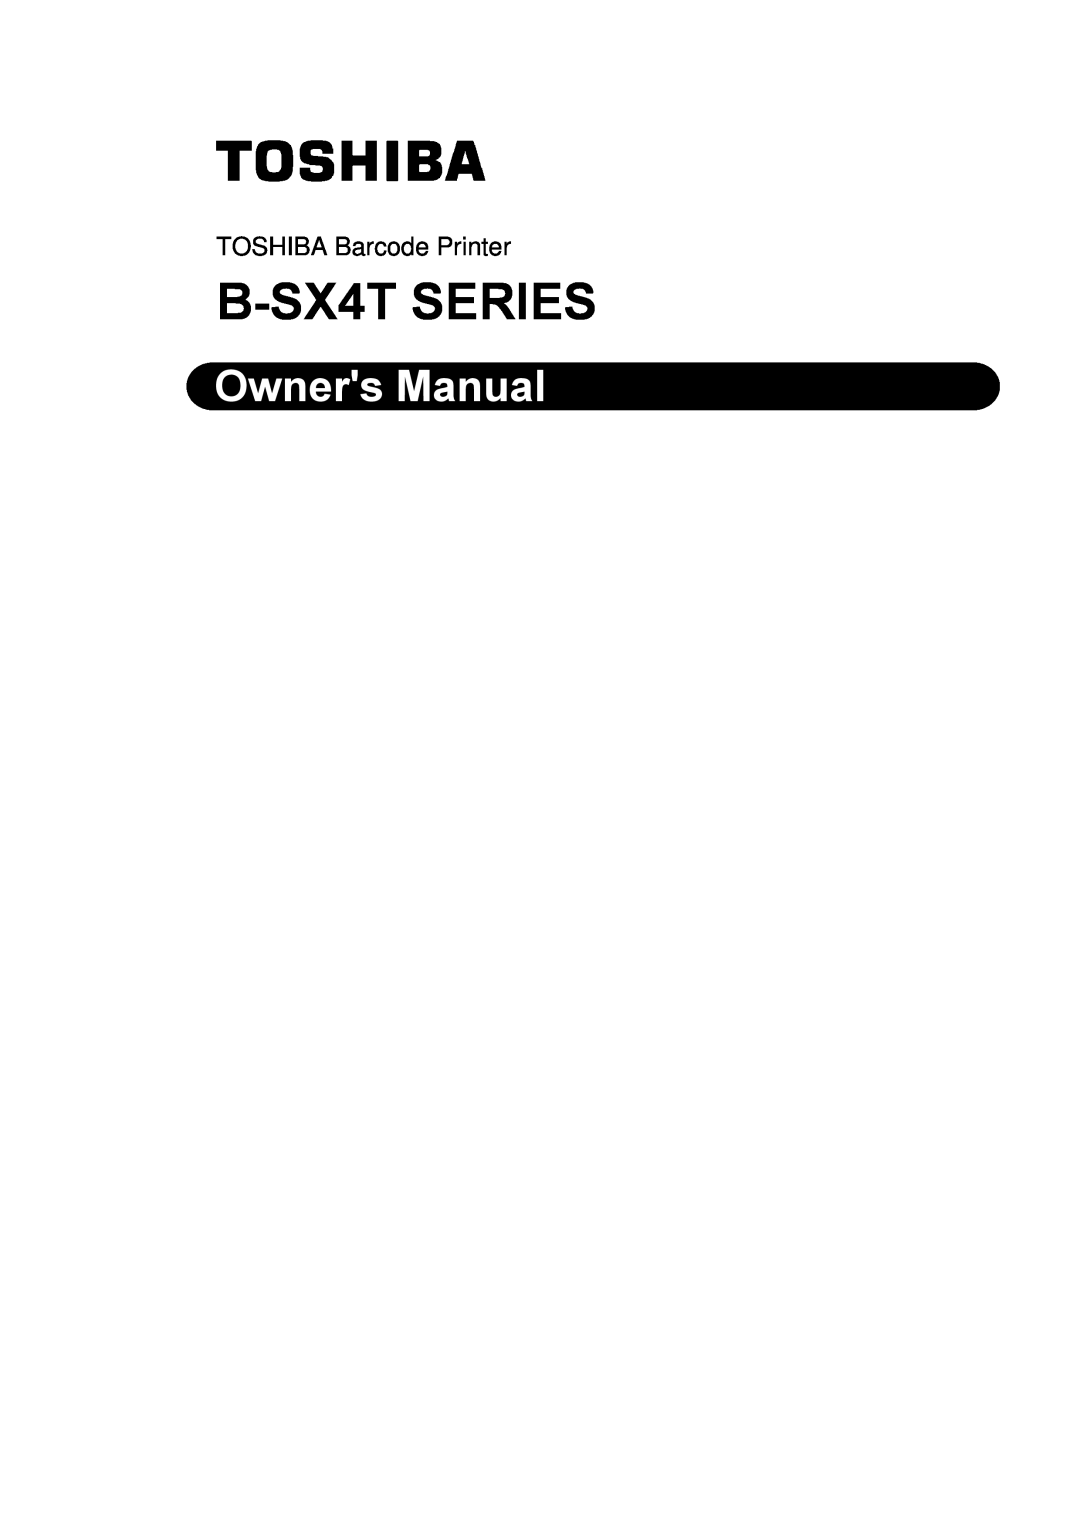 Toshiba owner manual B-SX4T SERIES, Owners Manual, TOSHIBA Barcode Printer 